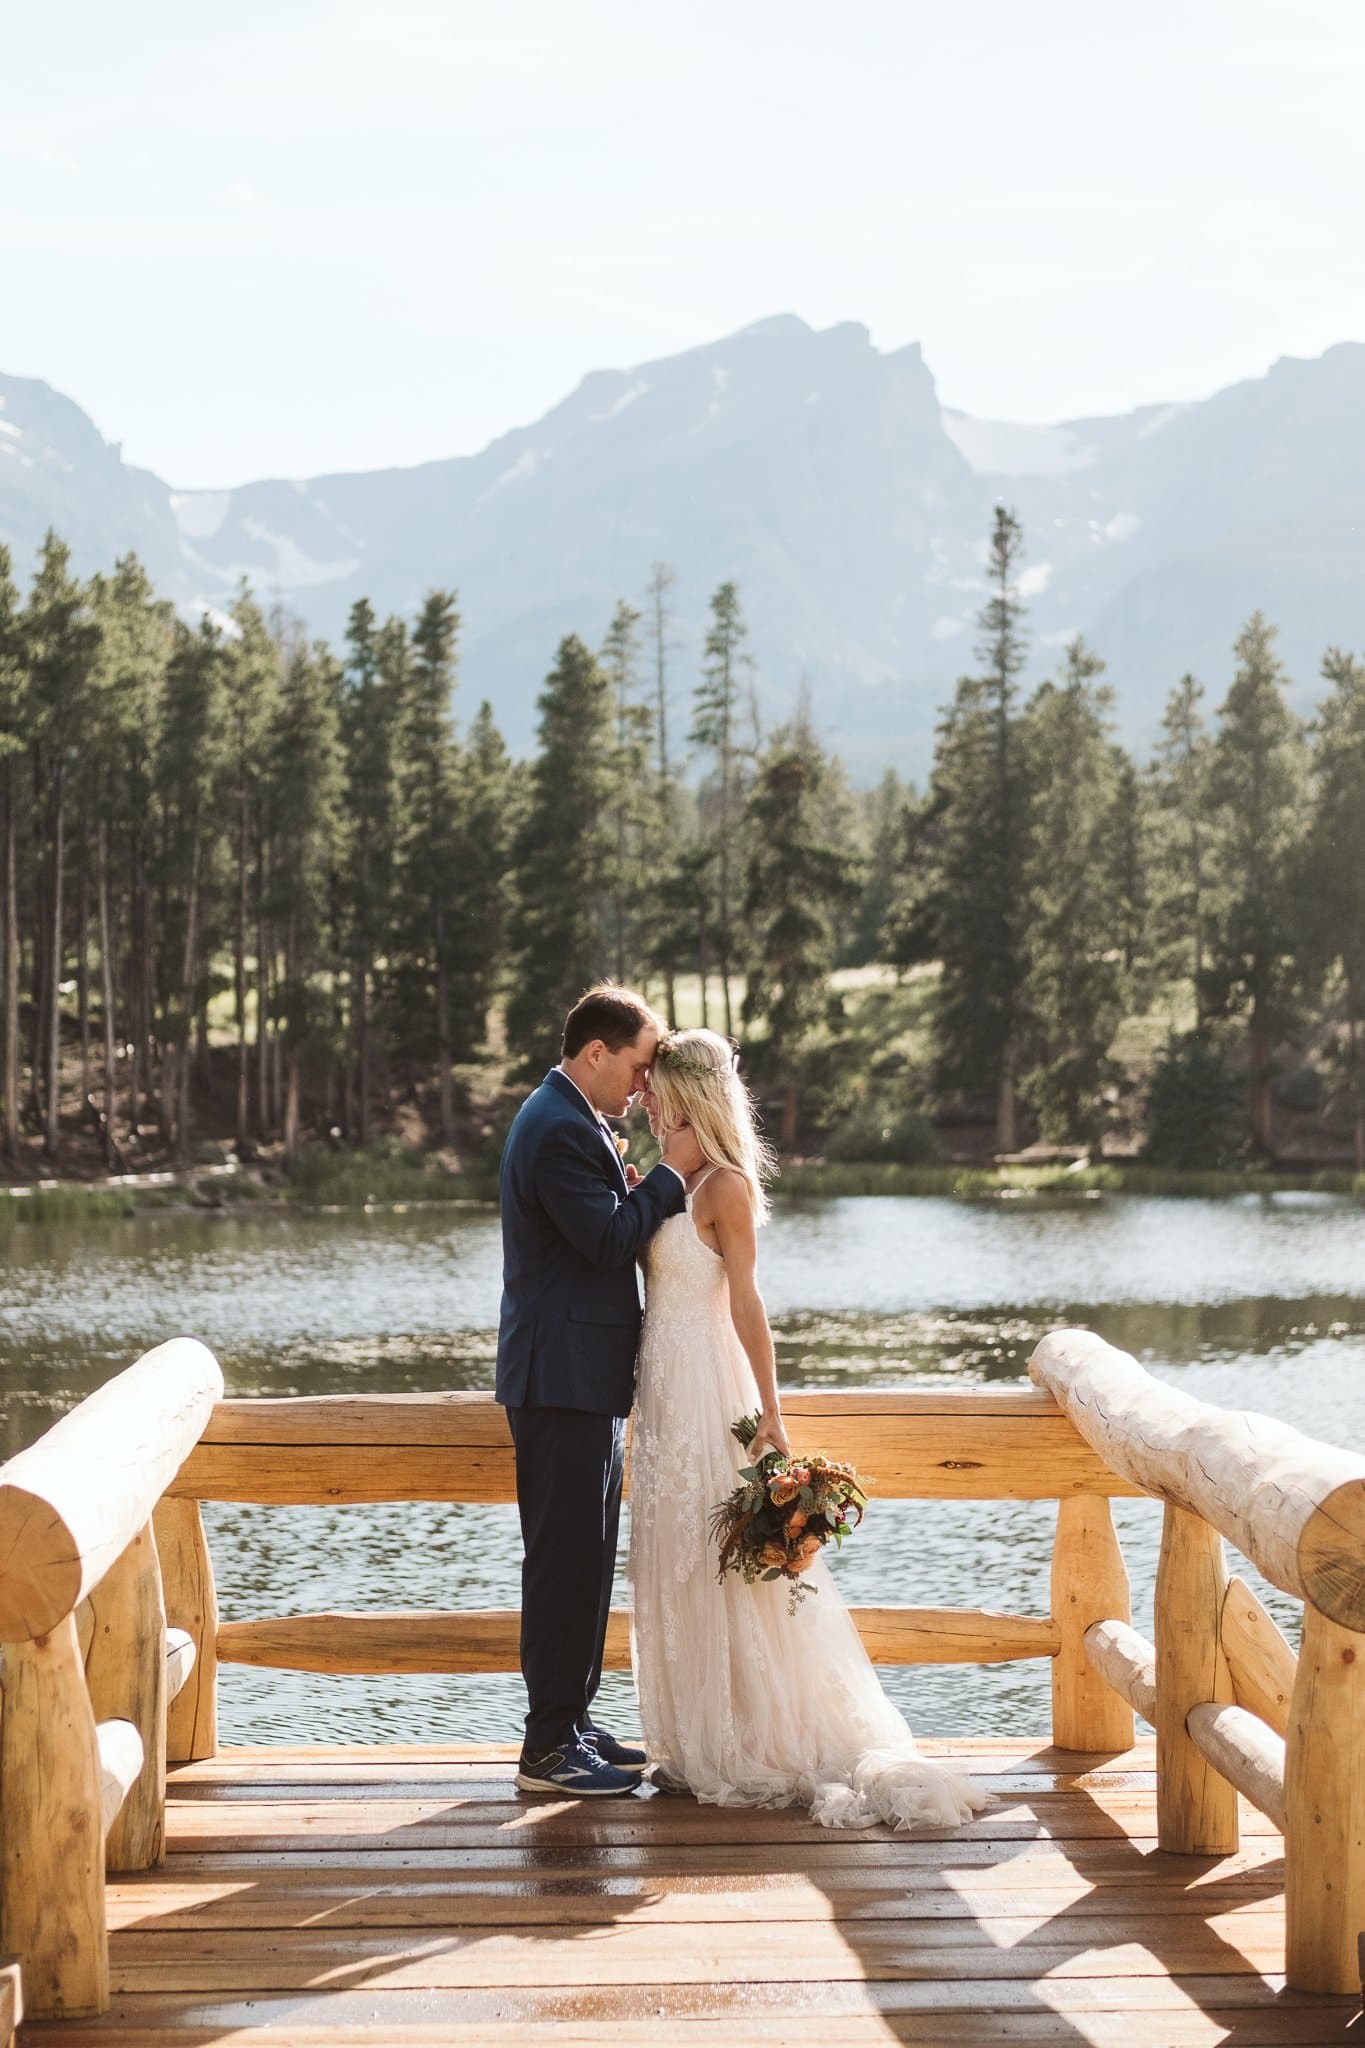 Sprague Lake elopement photos in Rocky Mountain National Park, Colorado elopement photographer